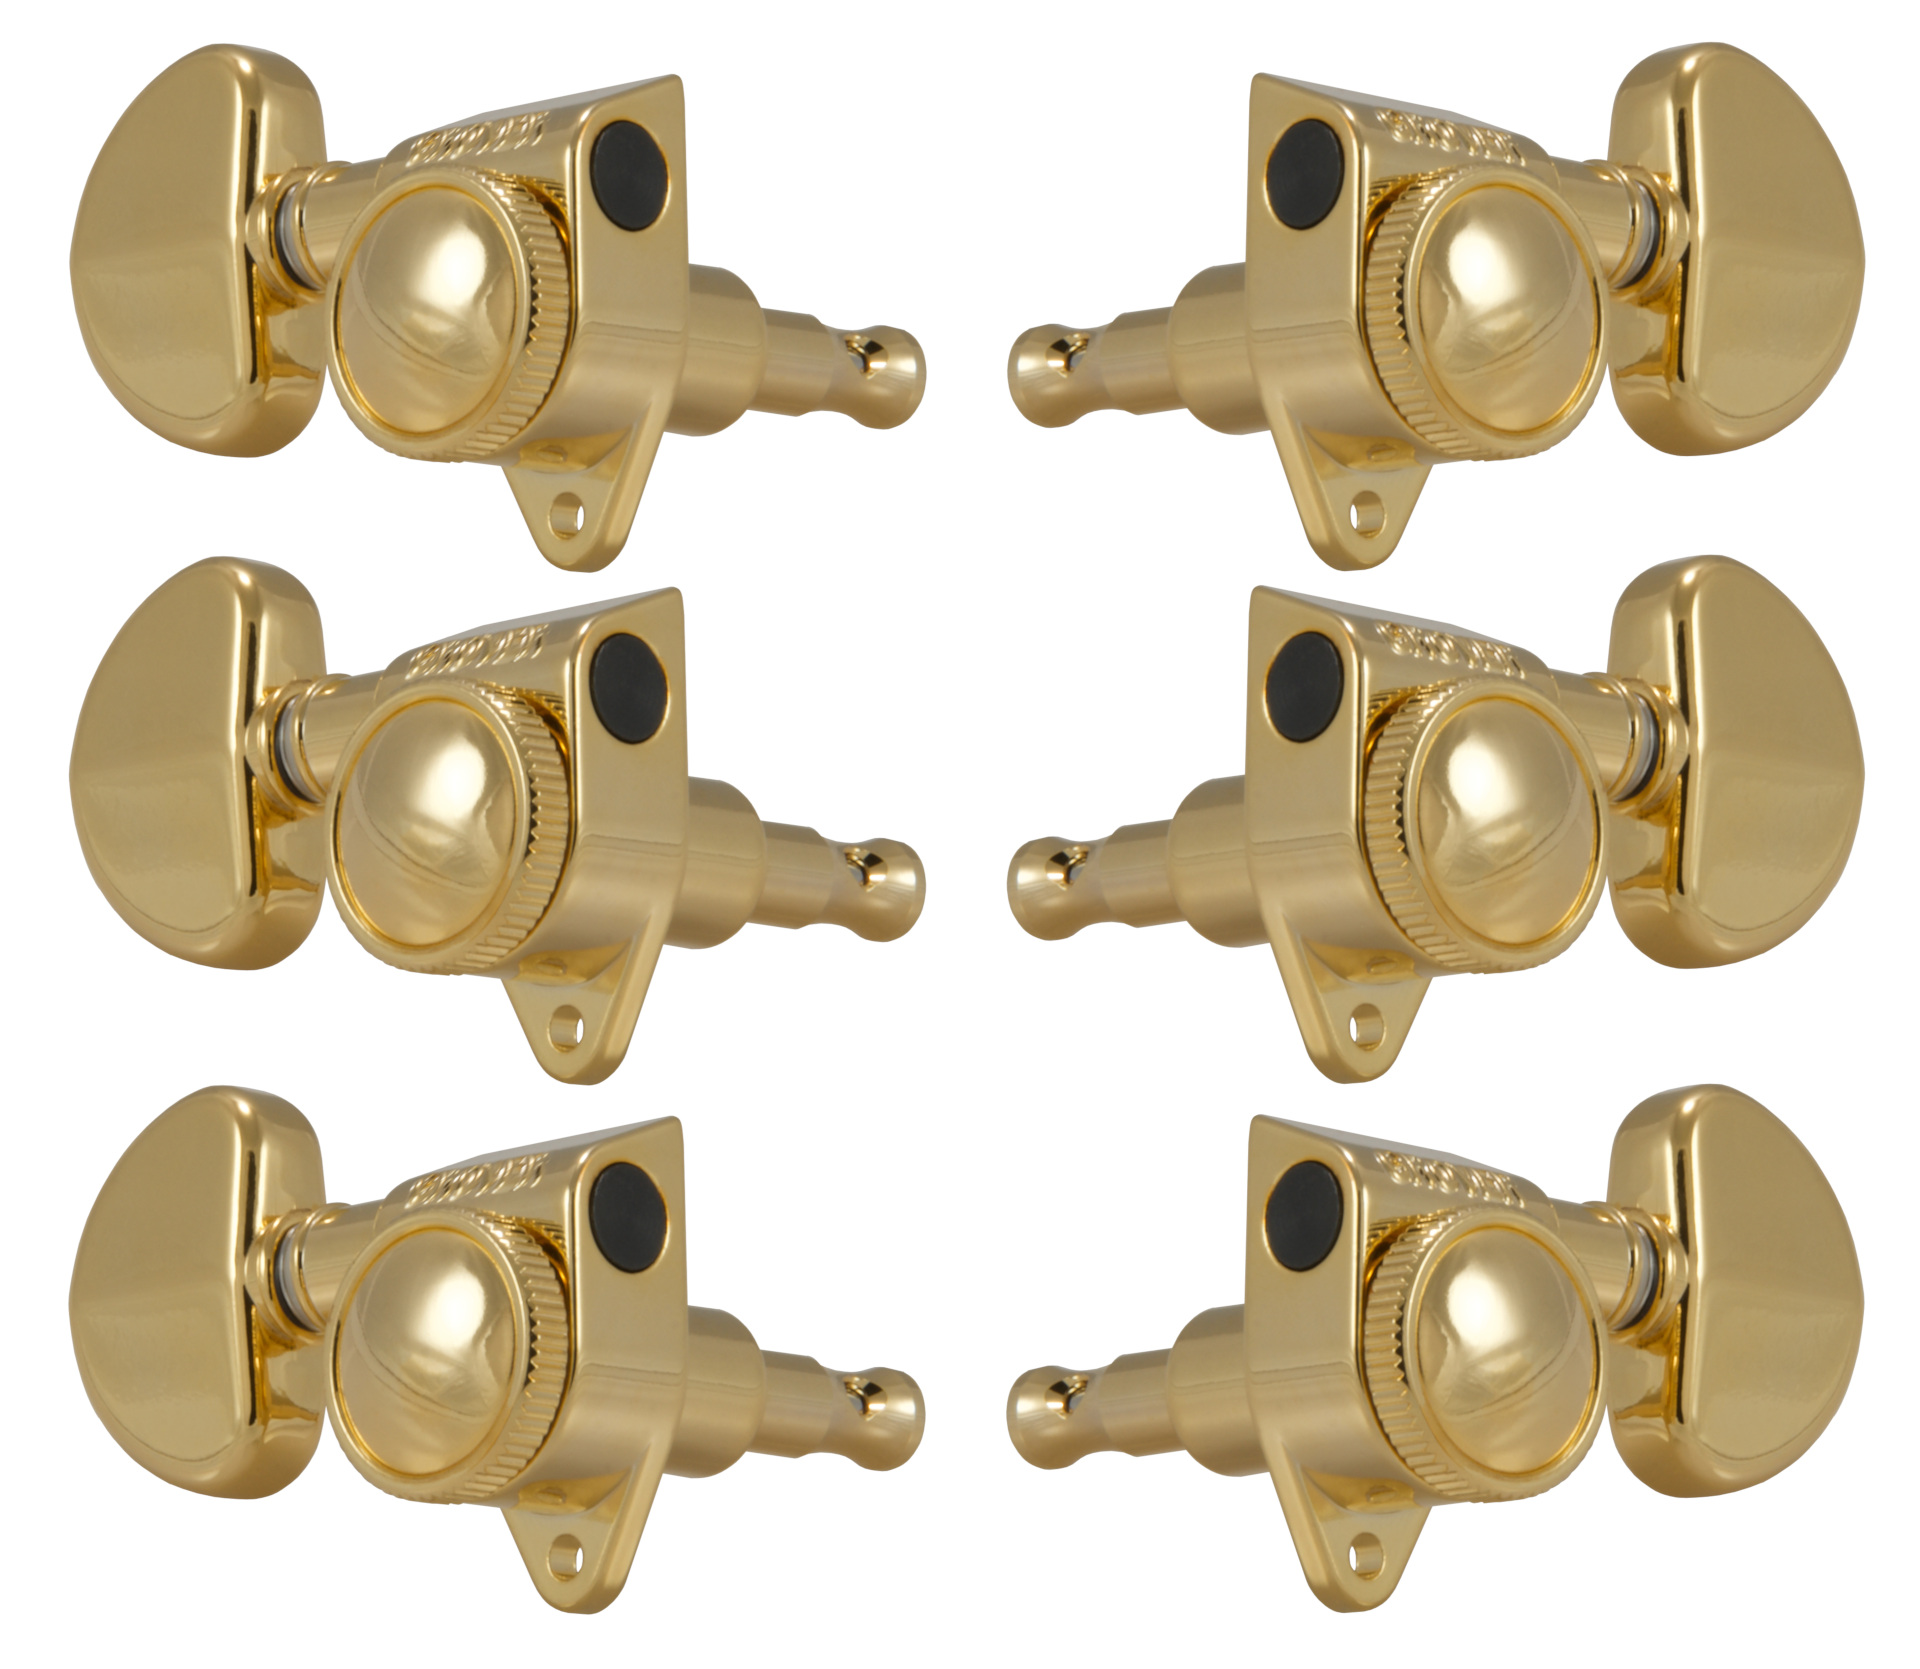 Grover 502G Roto-Grip Locking Rotomatics with Round Button - Guitar Machine Heads, 3 + 3 - Gold